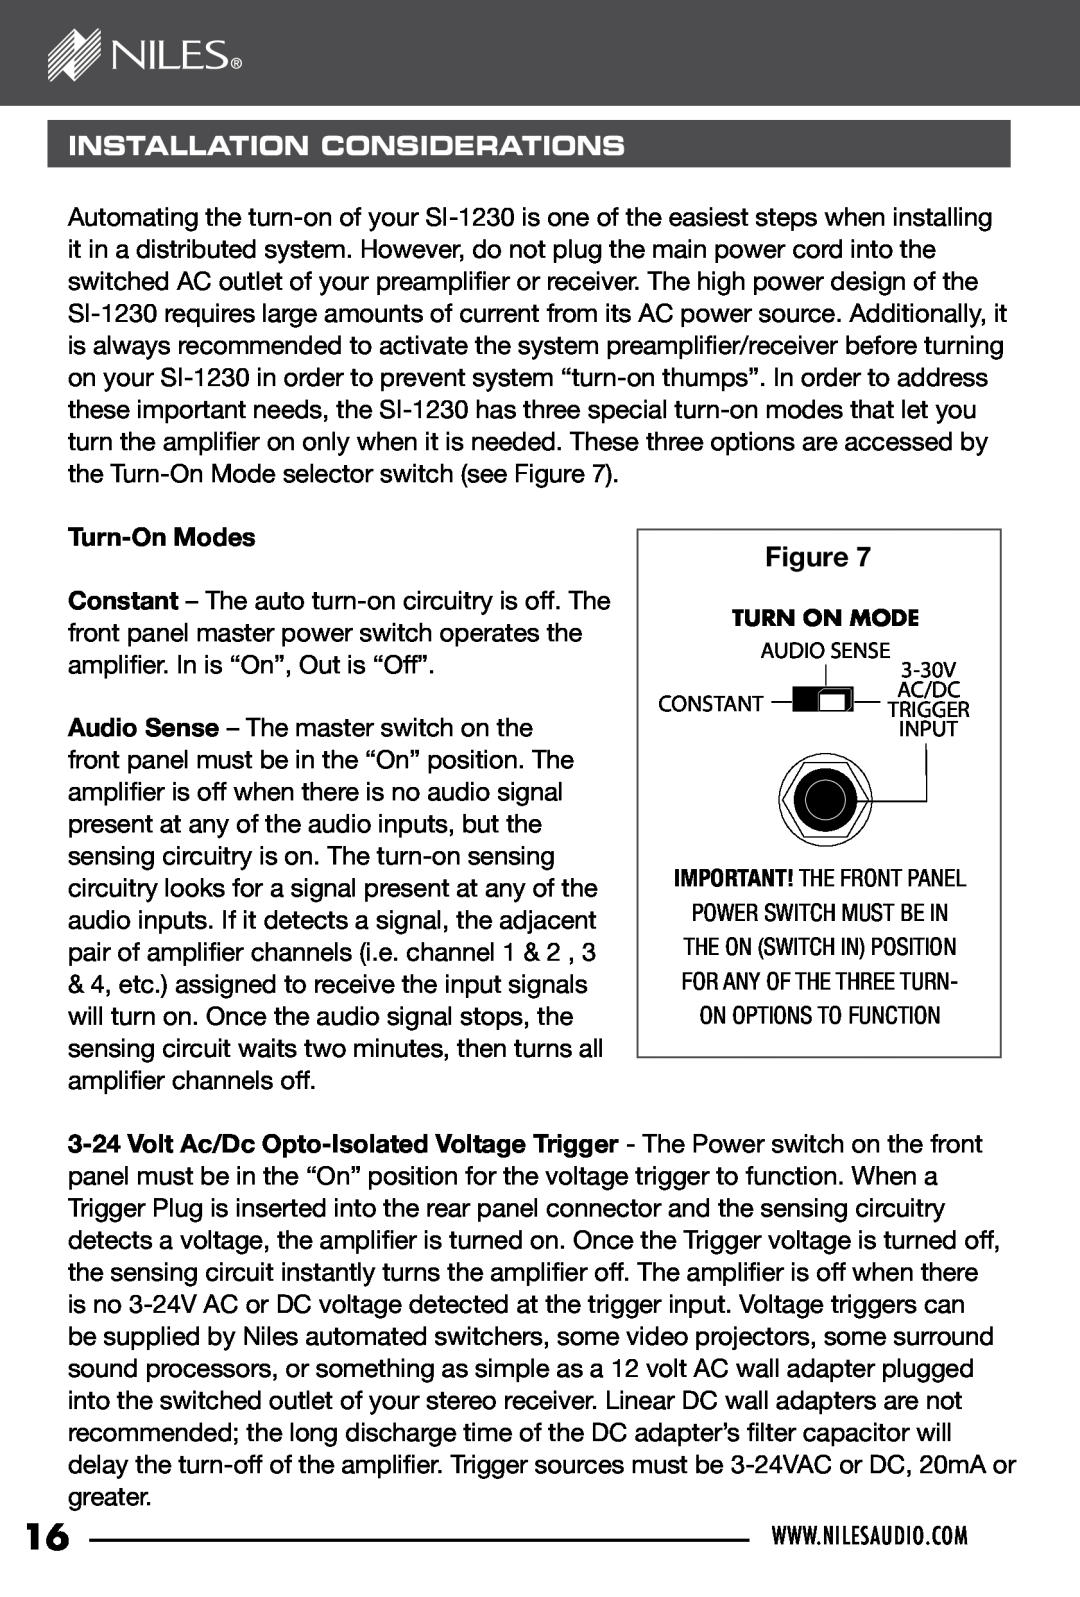 Niles Audio SI-1230 manual Installation Considerations 